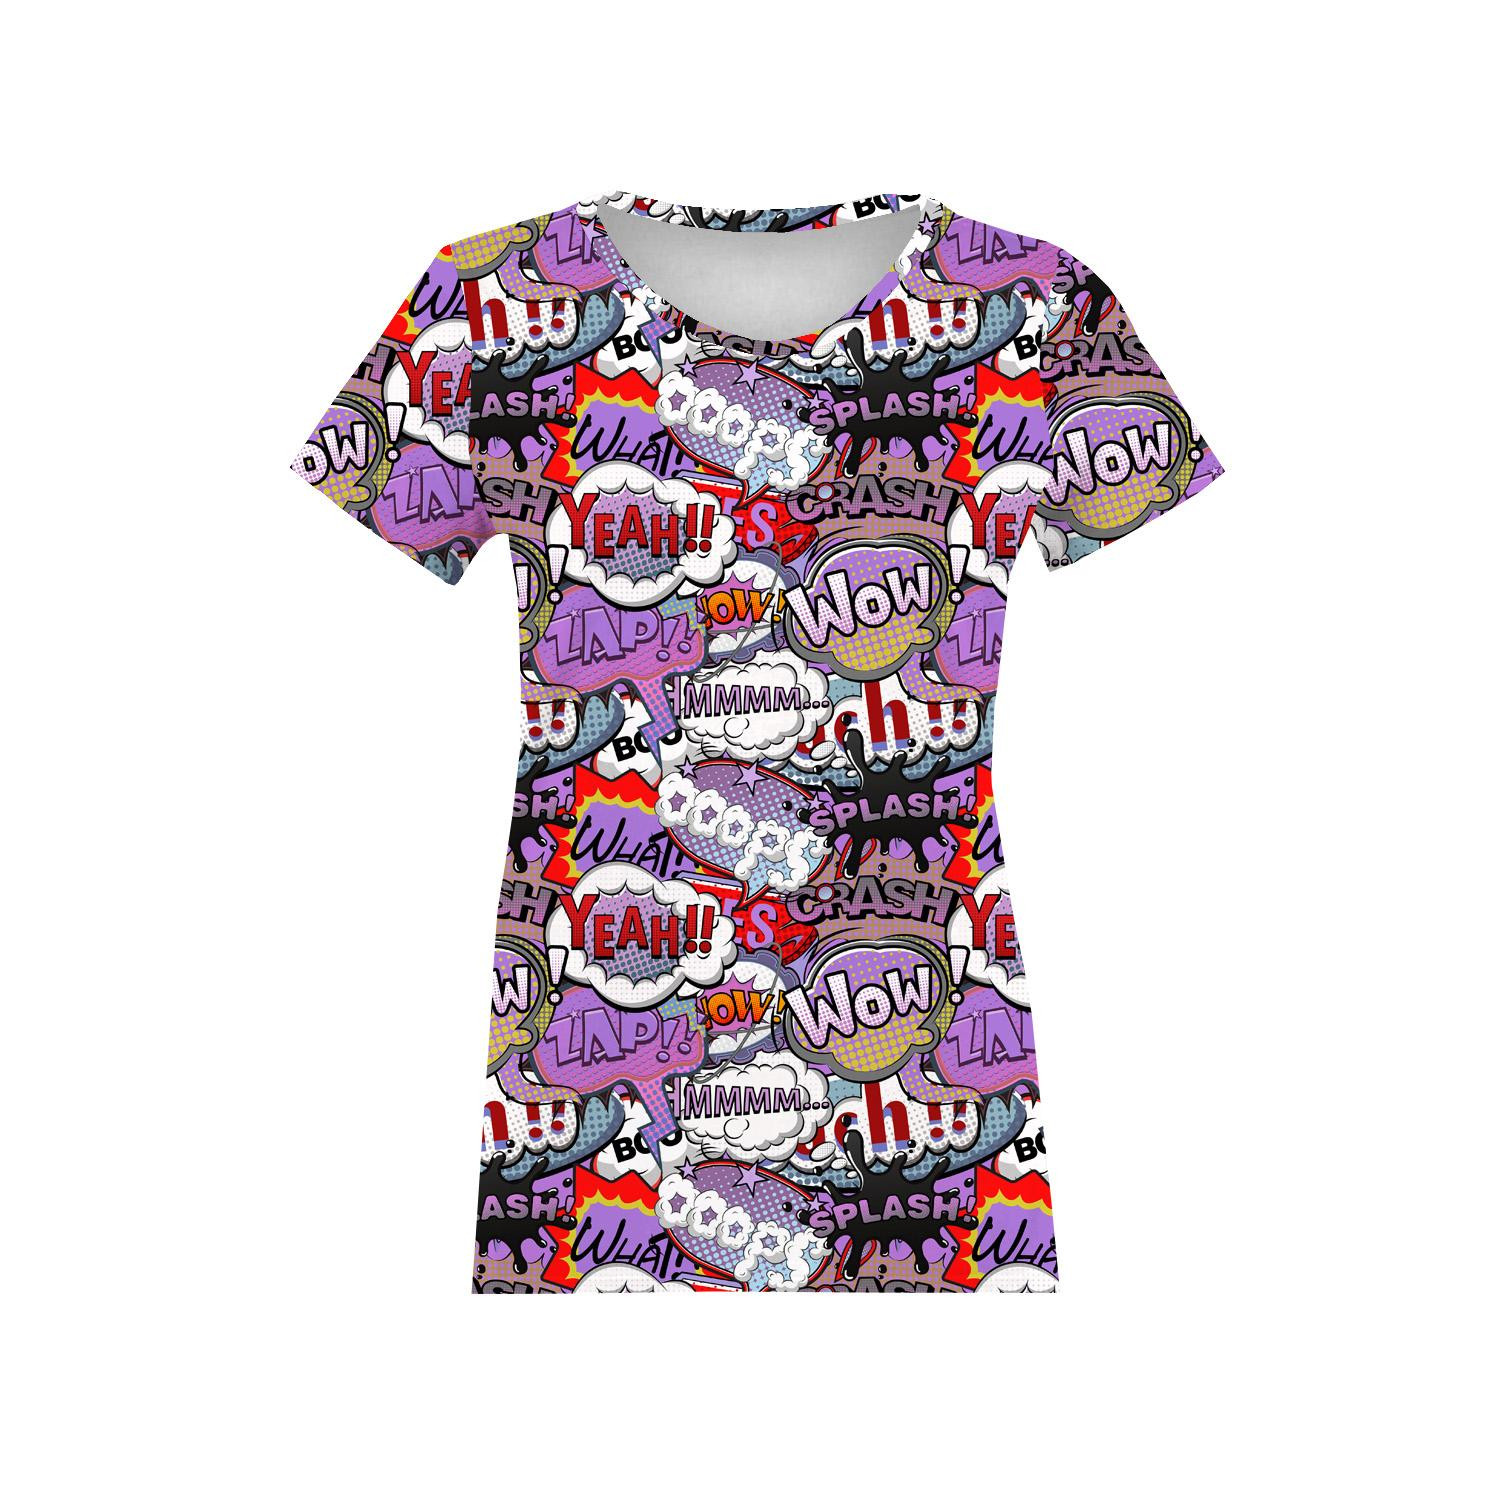 WOMEN’S T-SHIRT - COMIC BOOK (purple - red) - single jersey